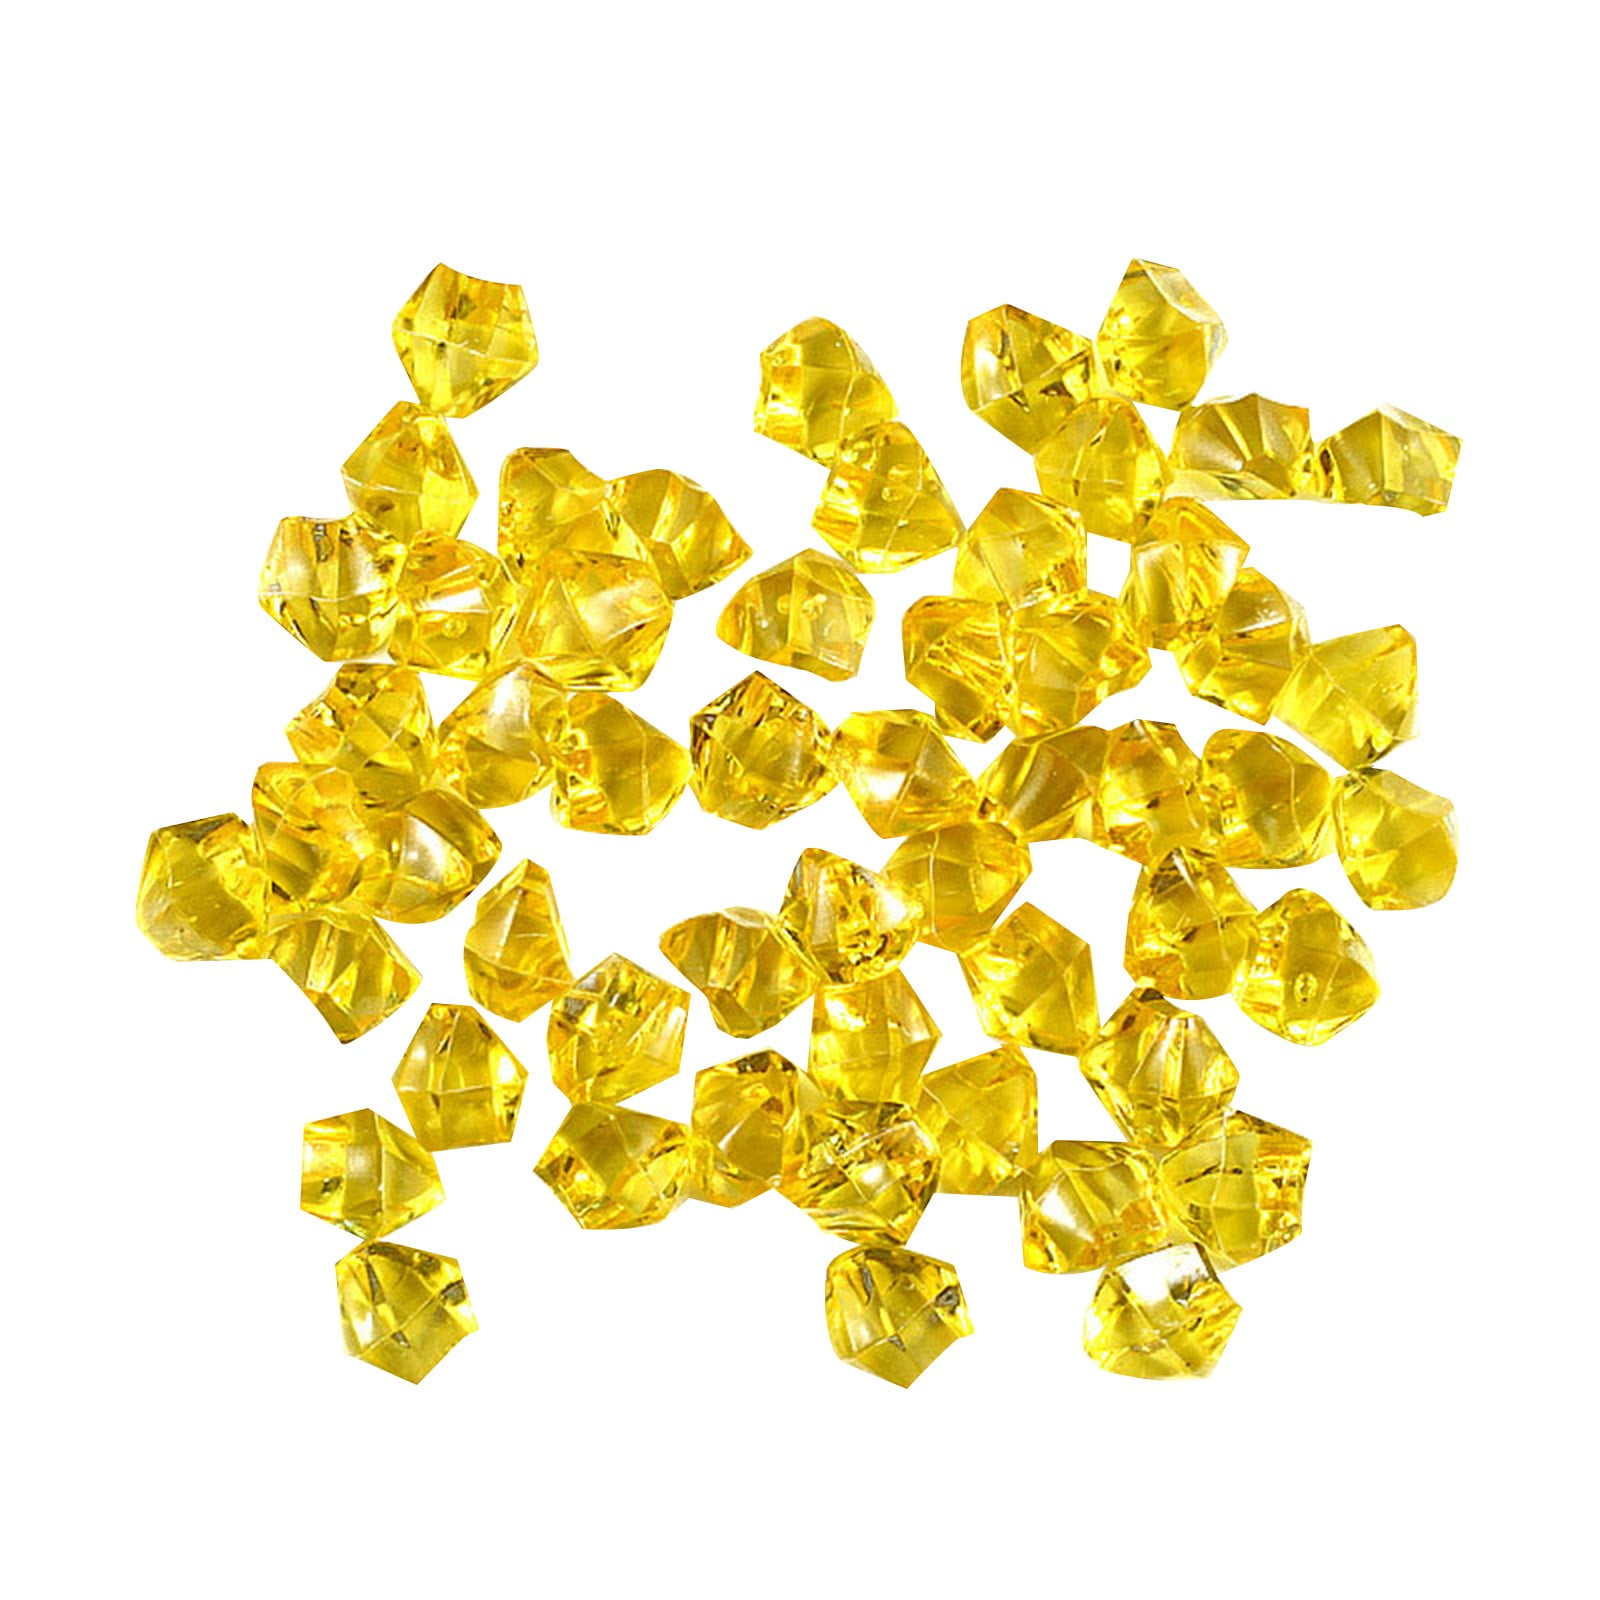 100pcs Acrylic Crystal Diamond Practical Durable Treasure Gems for Home Shop 